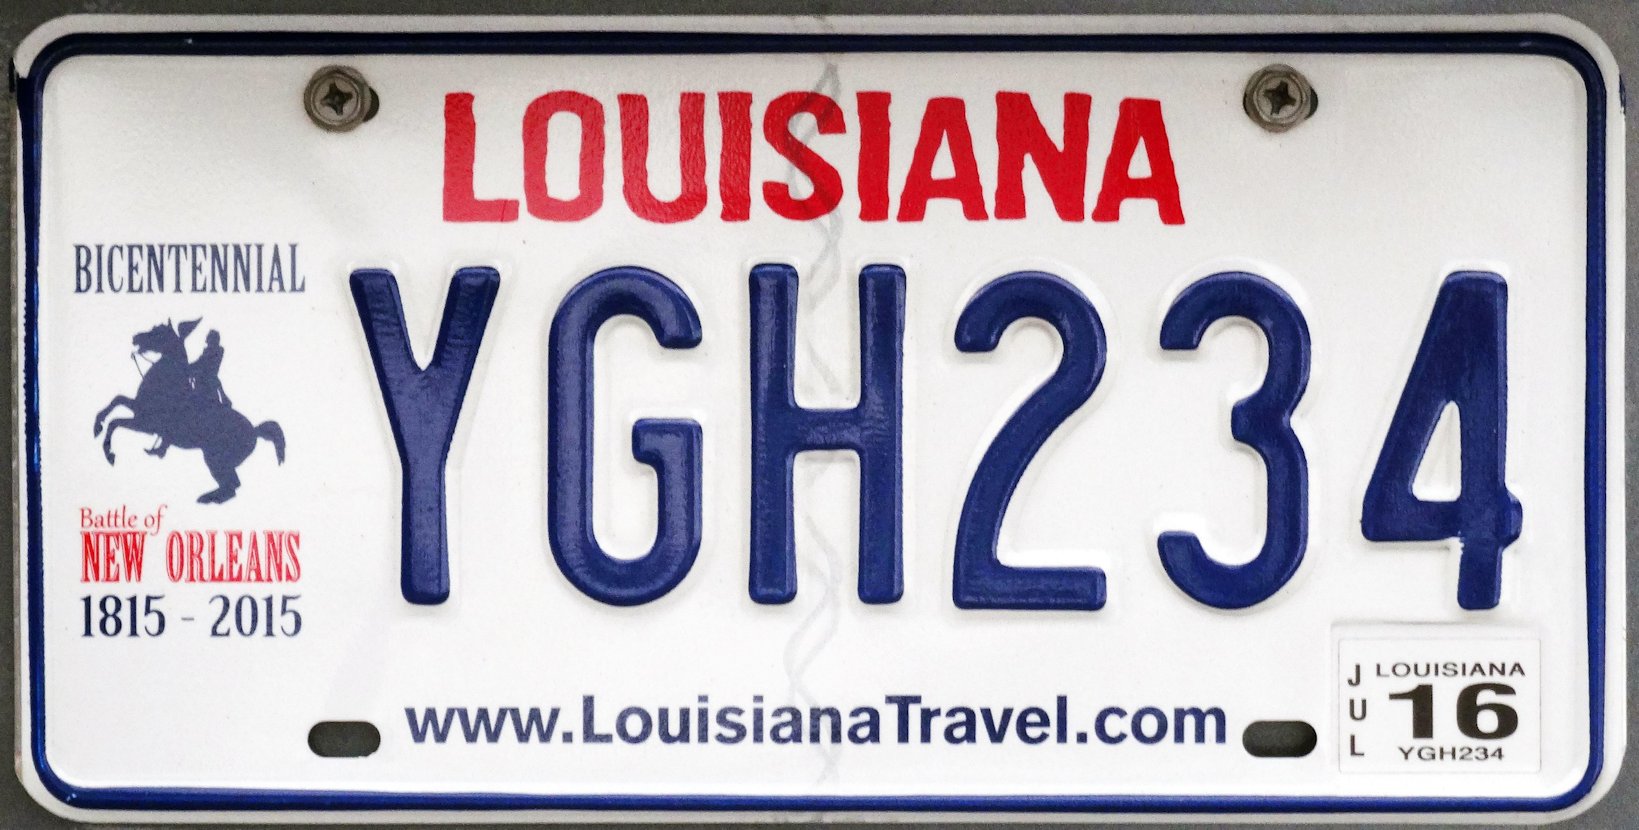 LA-2014-New-Orleans-YGH234.r-DW-4.7.2015-137365.jpg